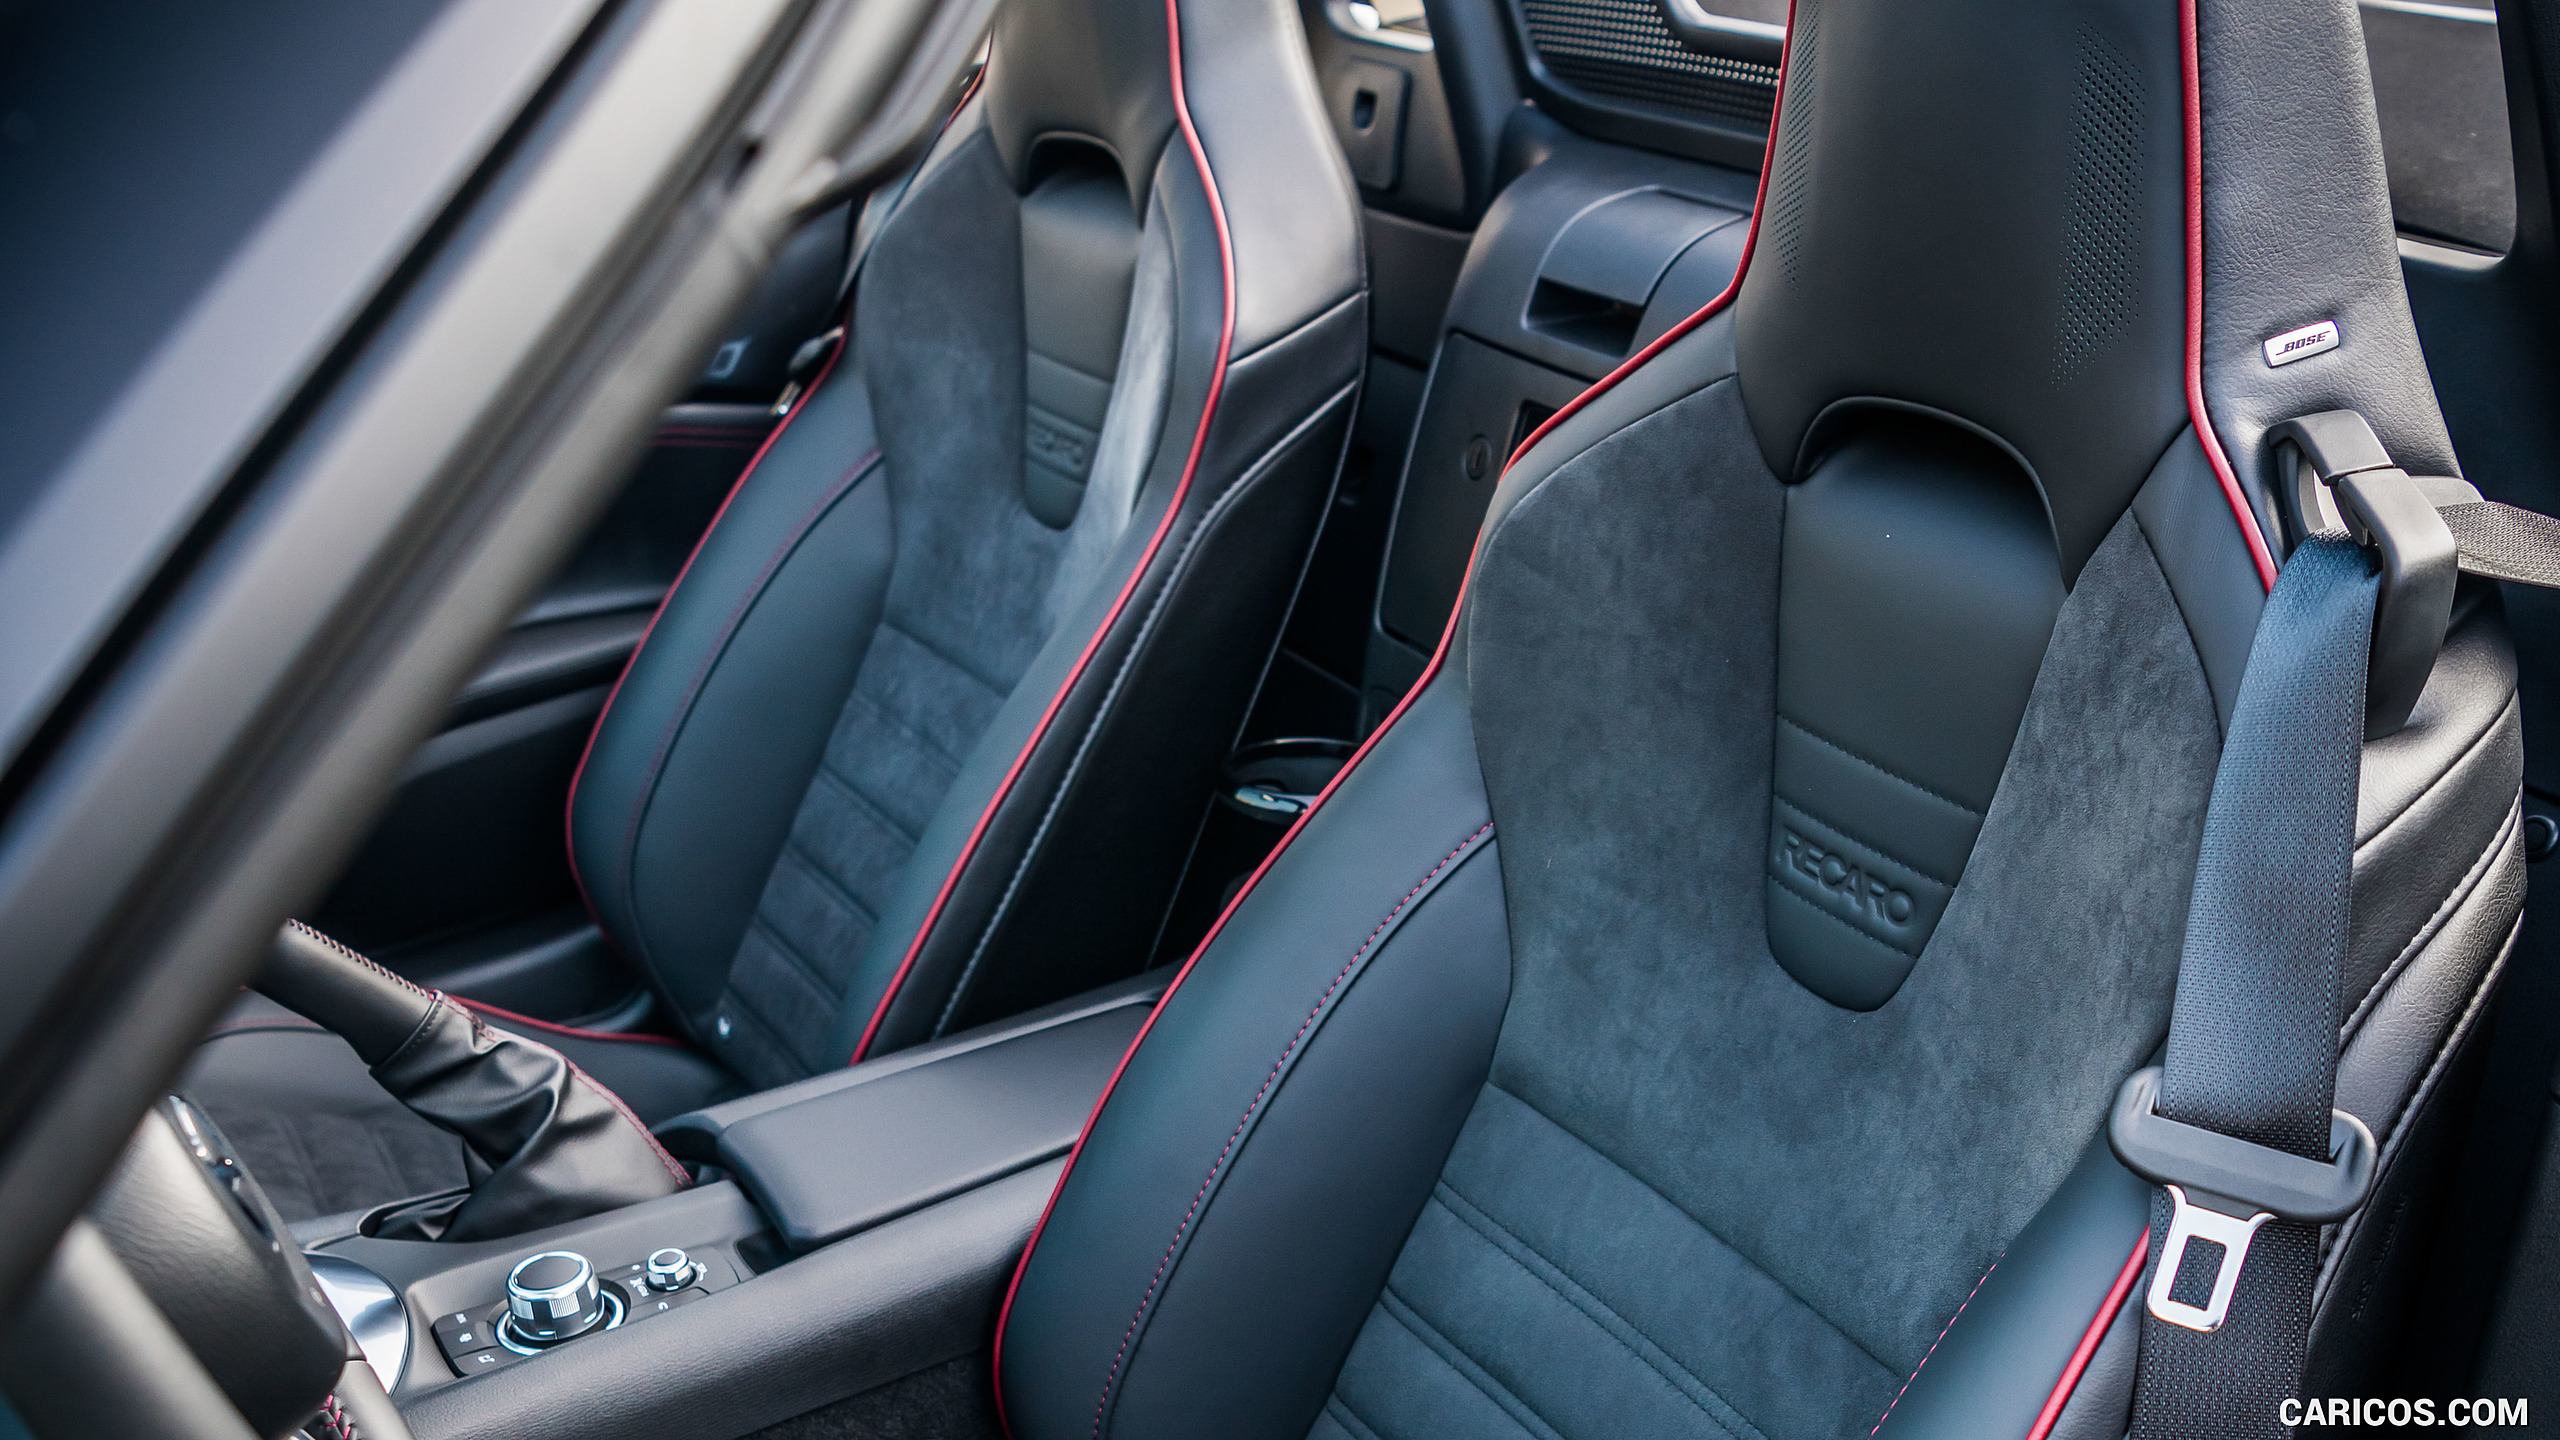 2019 Mazda MX-5 Roadster - Interior, Seats, #63 of 101